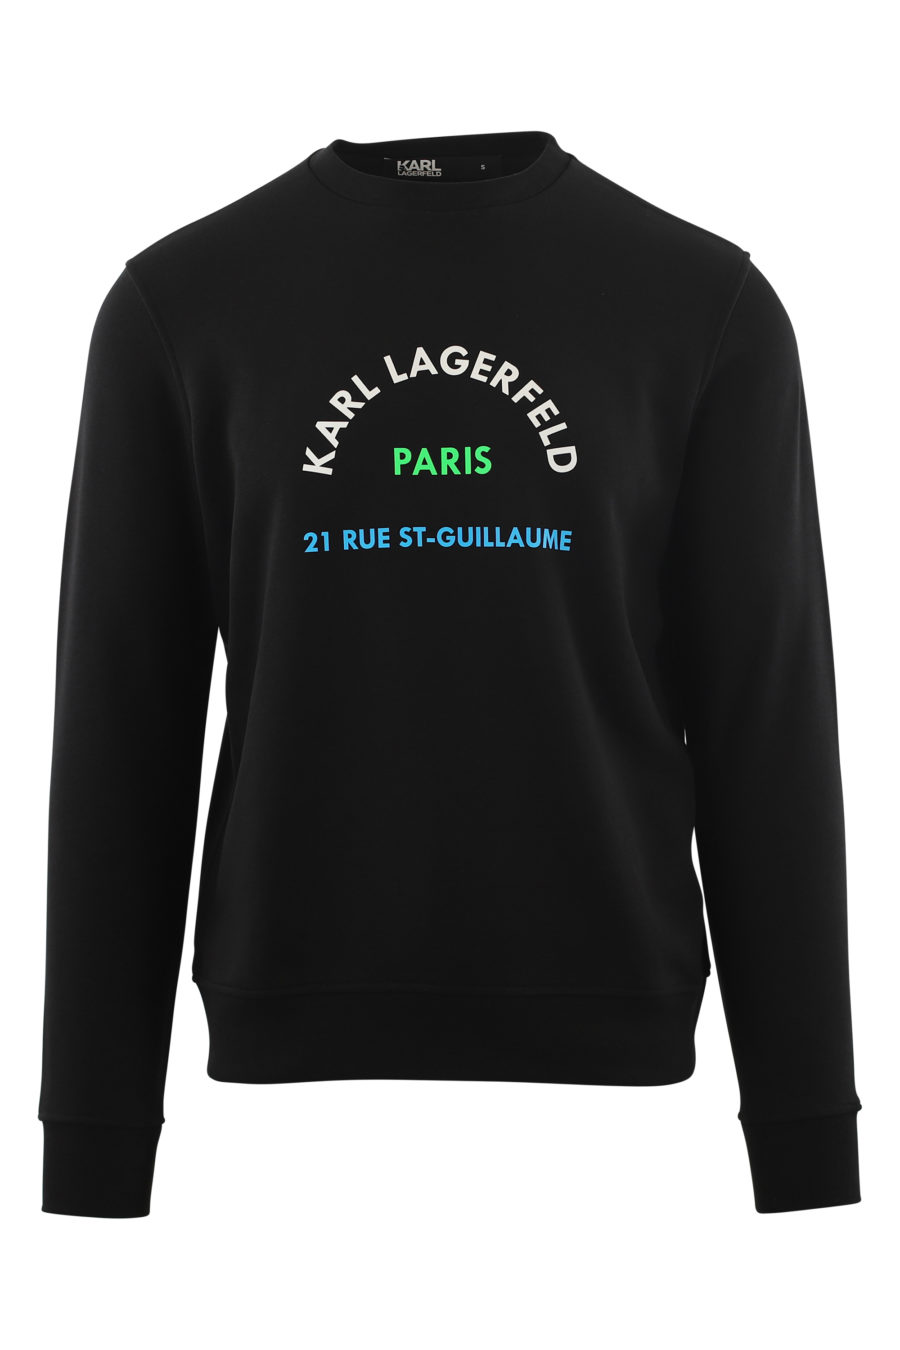 Sudadera negra con logo "rue st- guillaume" multicolor - IMG 6579